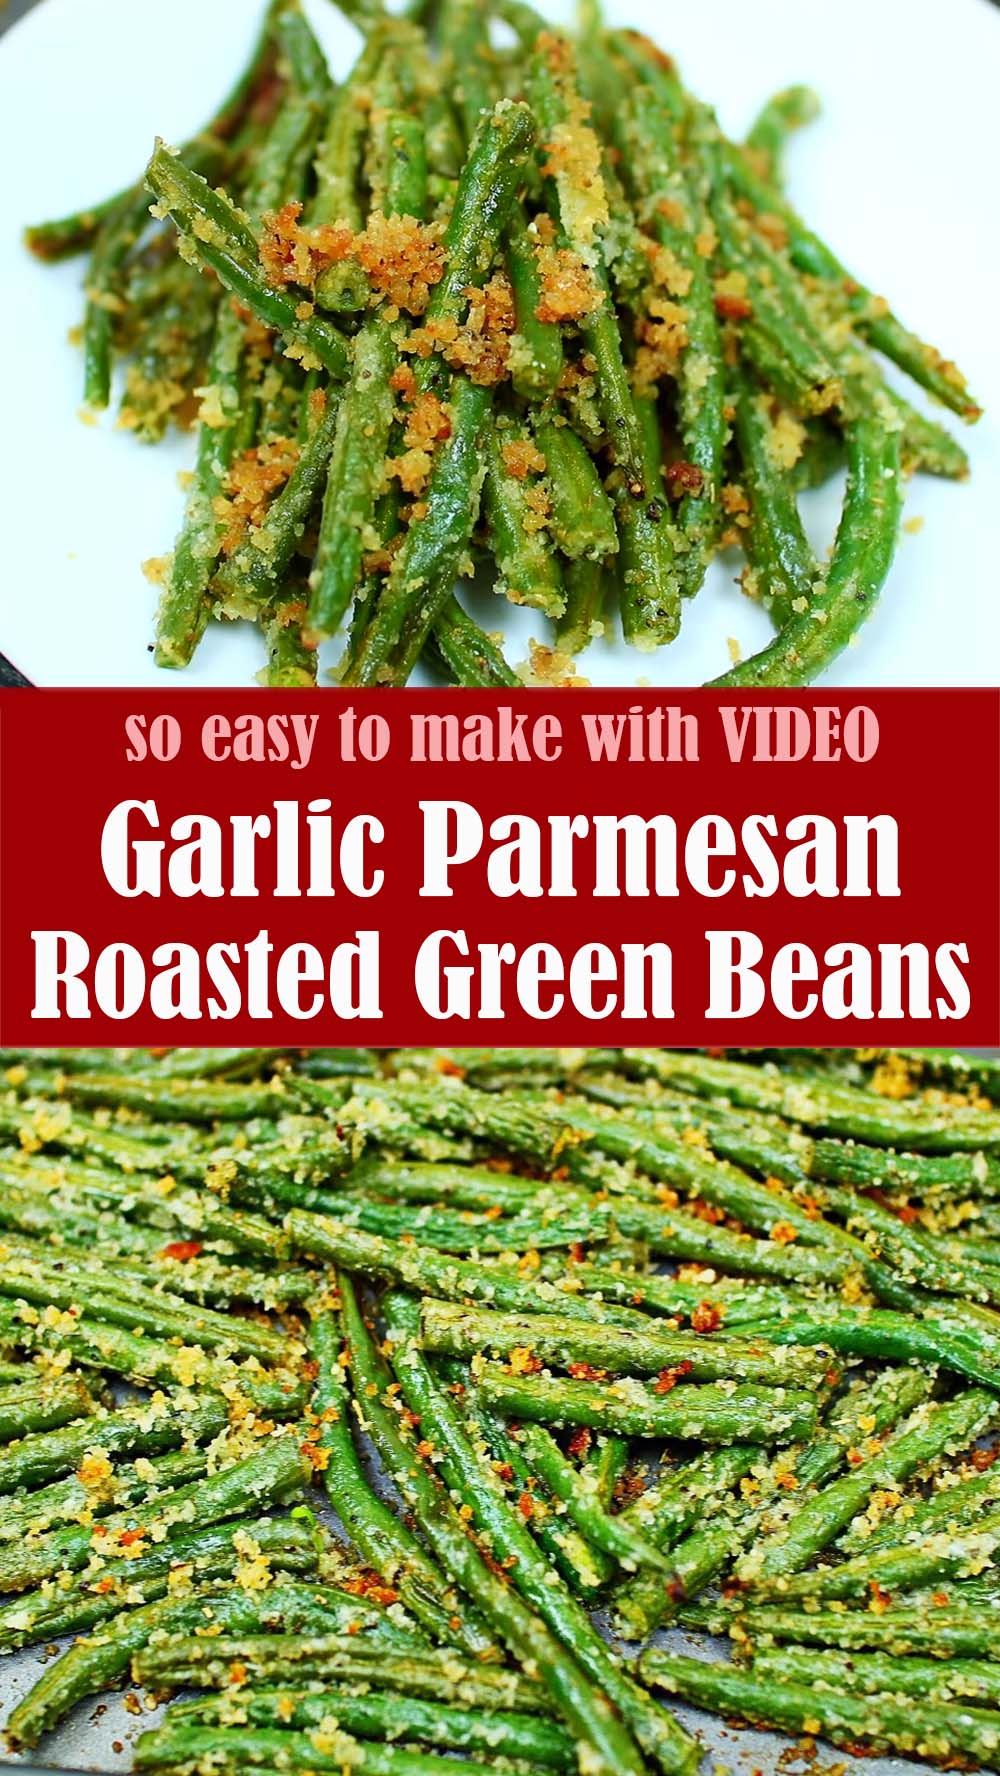 Garlic Parmesan Roasted Green Beans